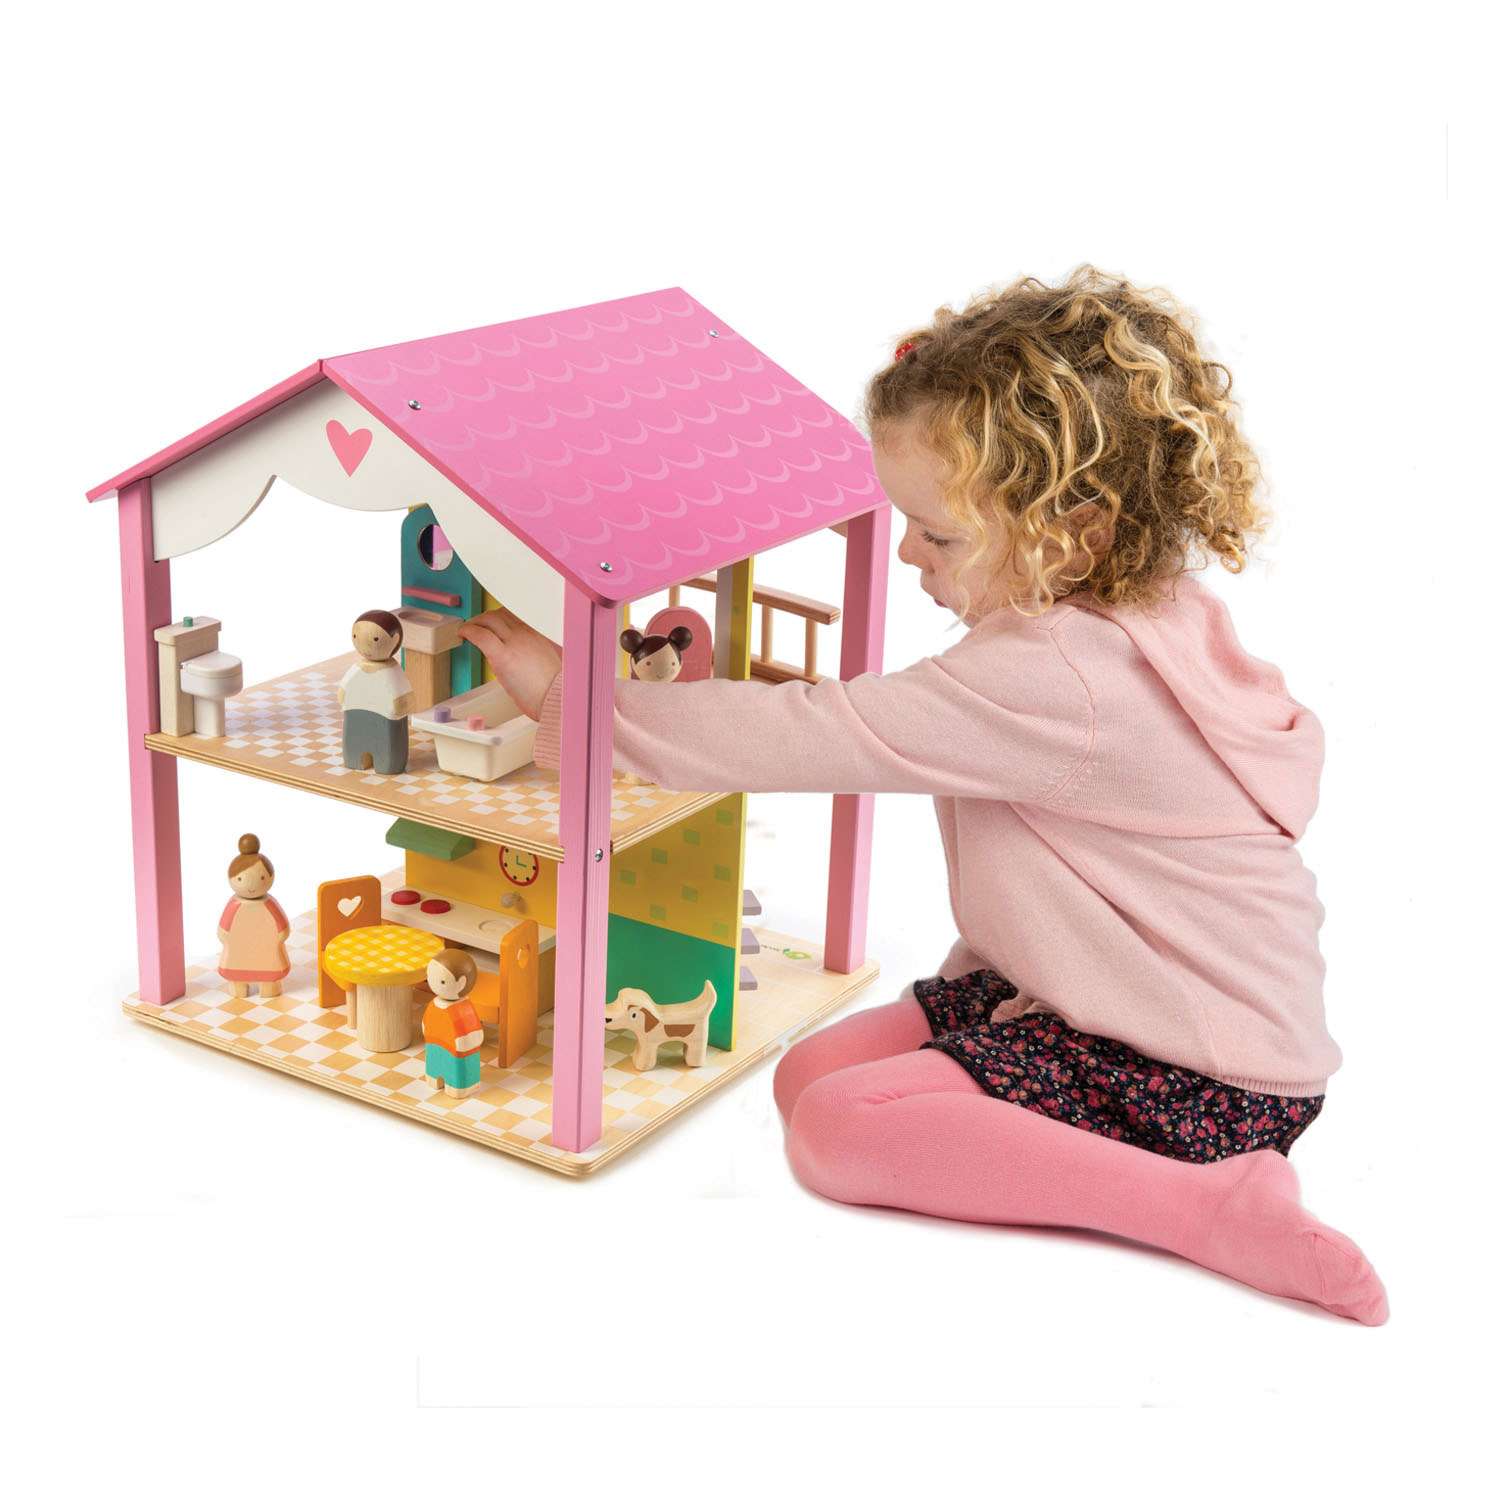 Tender Leaf Toys ของเล่นไม้ บ้านตุ๊กตา บ้านพิ้งค์ลีฟ Pink Leaf House